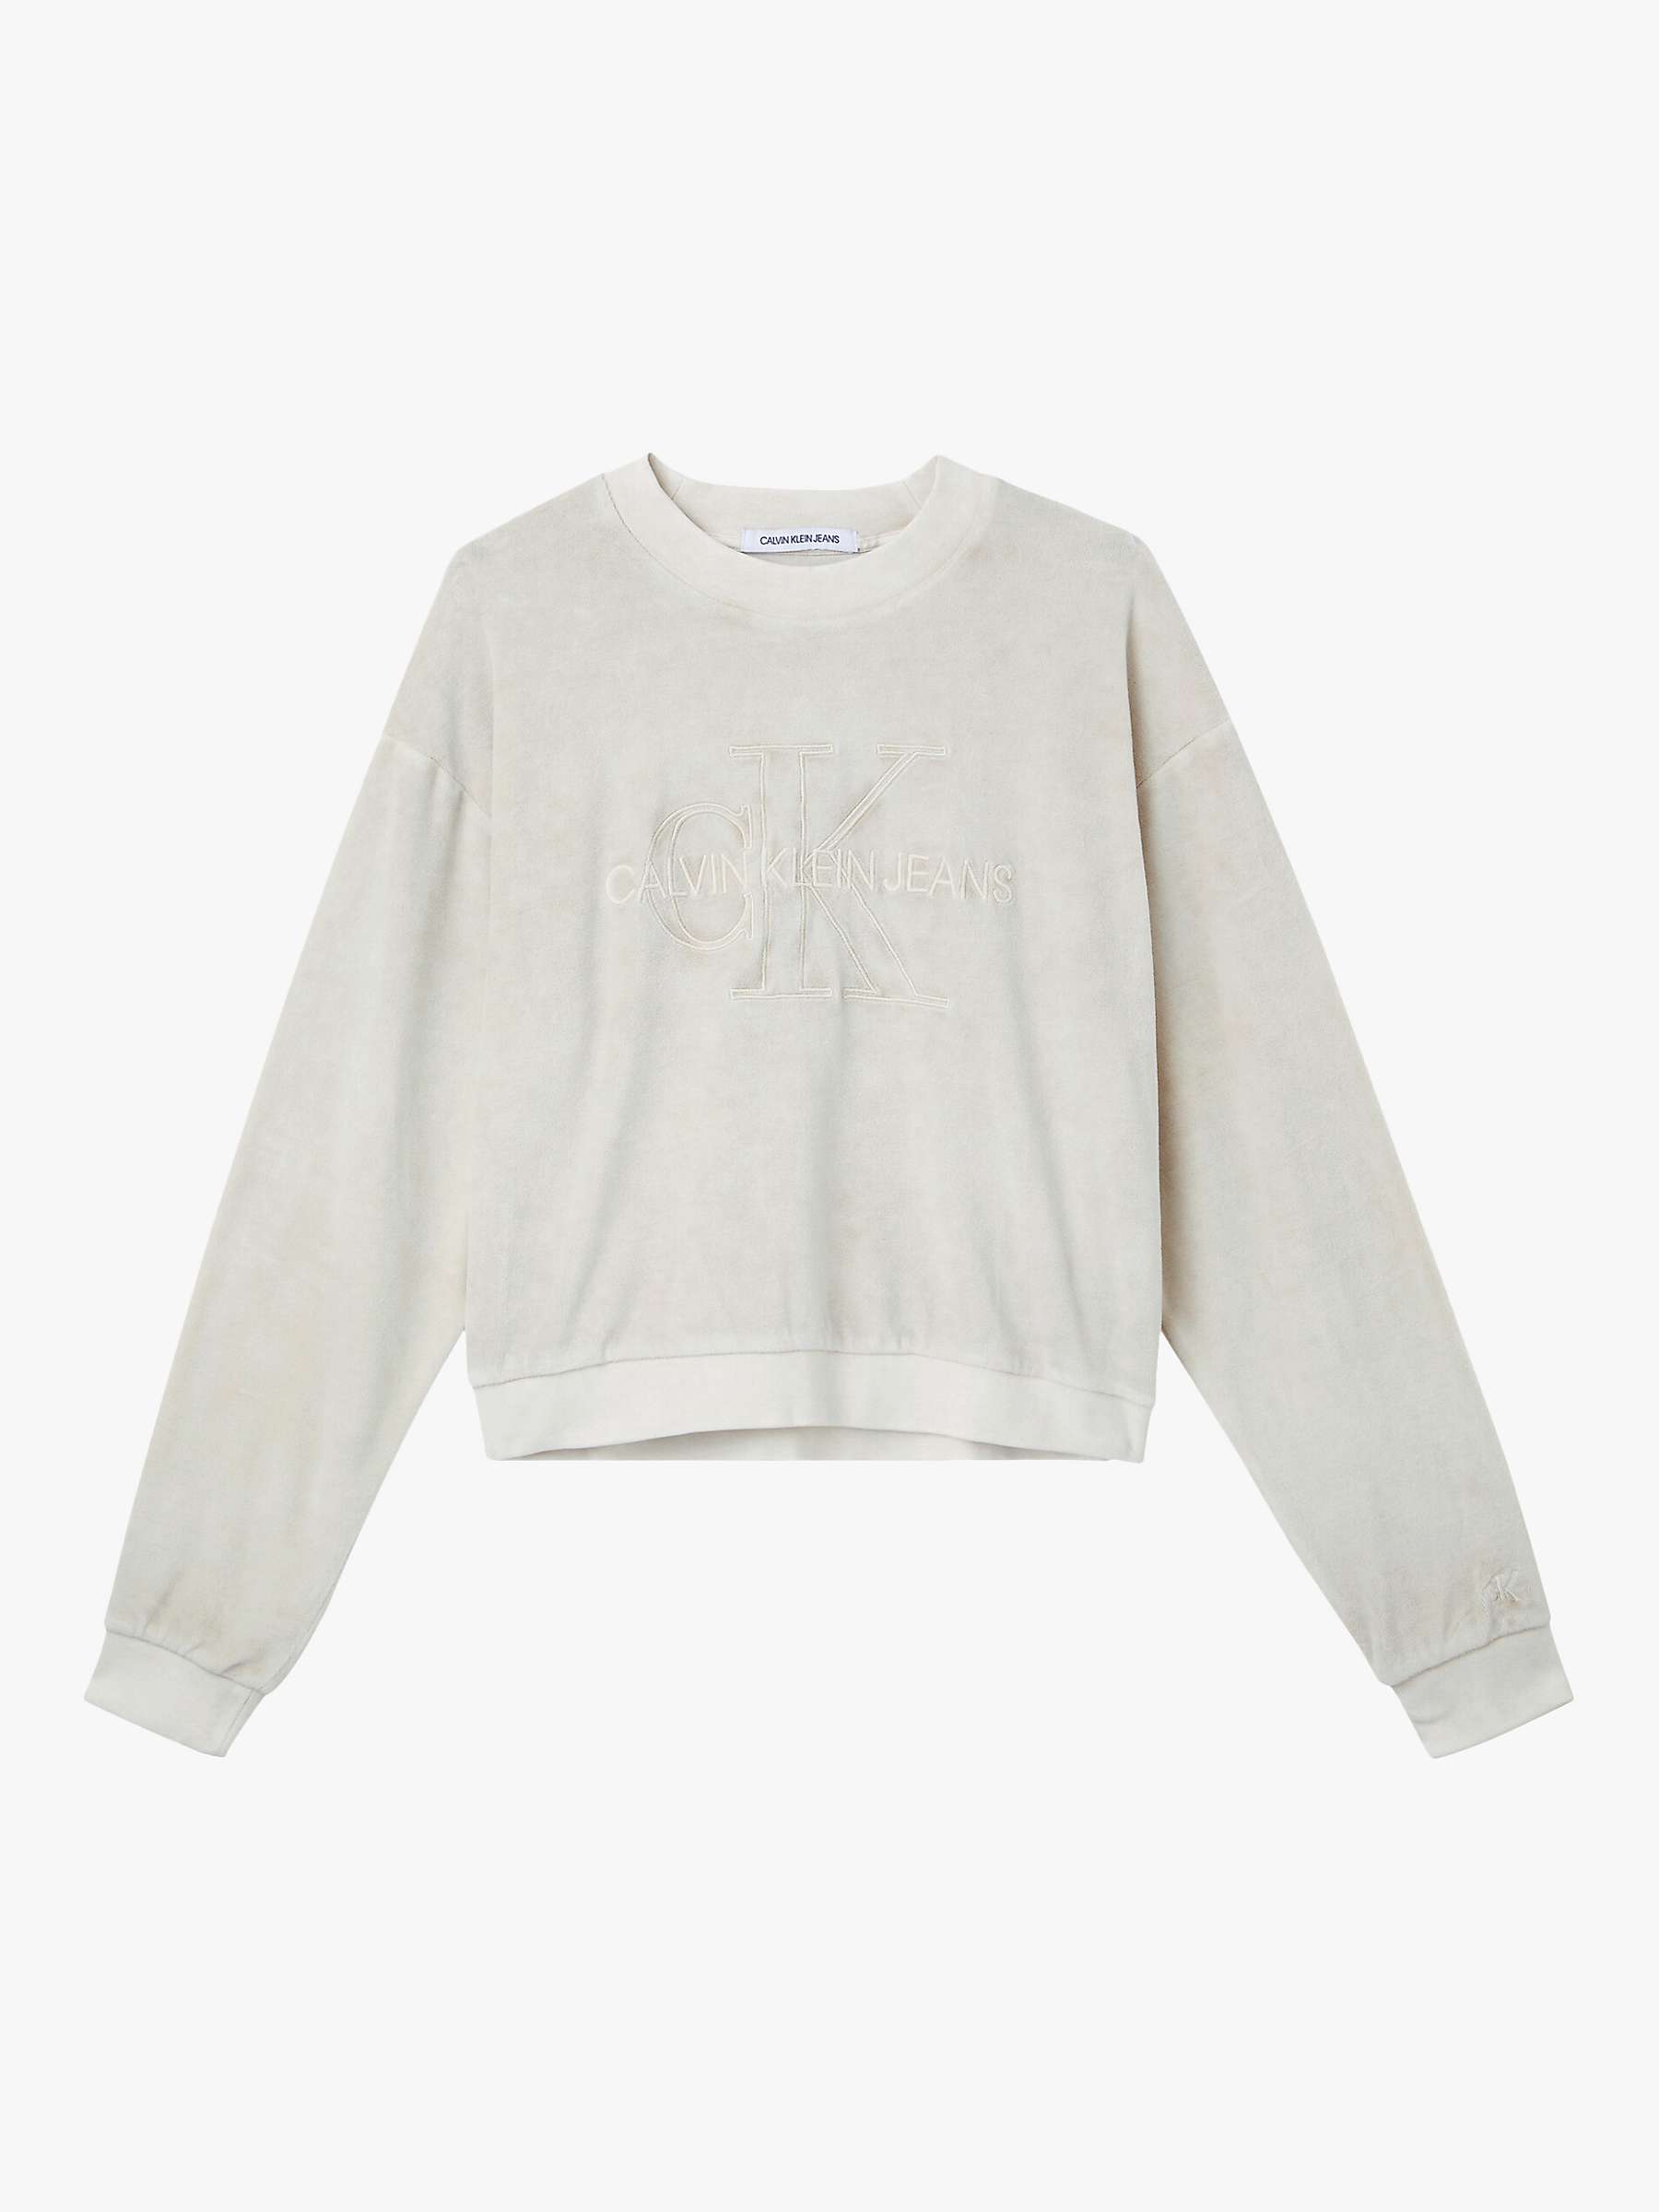 Buy Calvin Klein Jeans Washed Velvet Sweatshirt Online at johnlewis.com